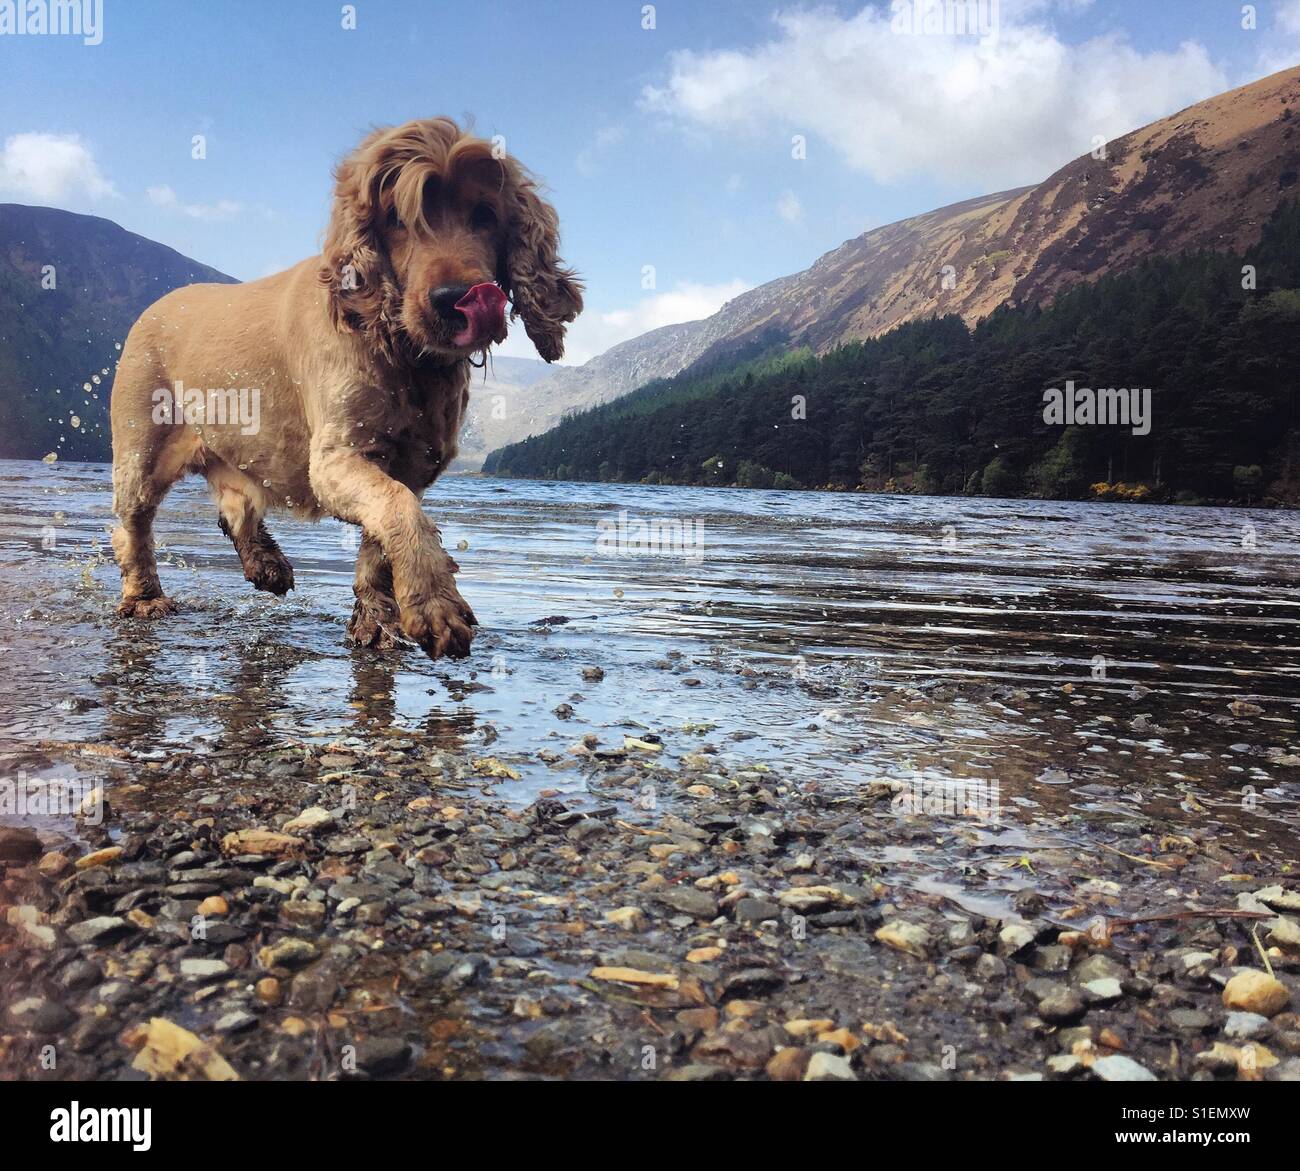 Dog modelling at a lake shore. Stock Photo